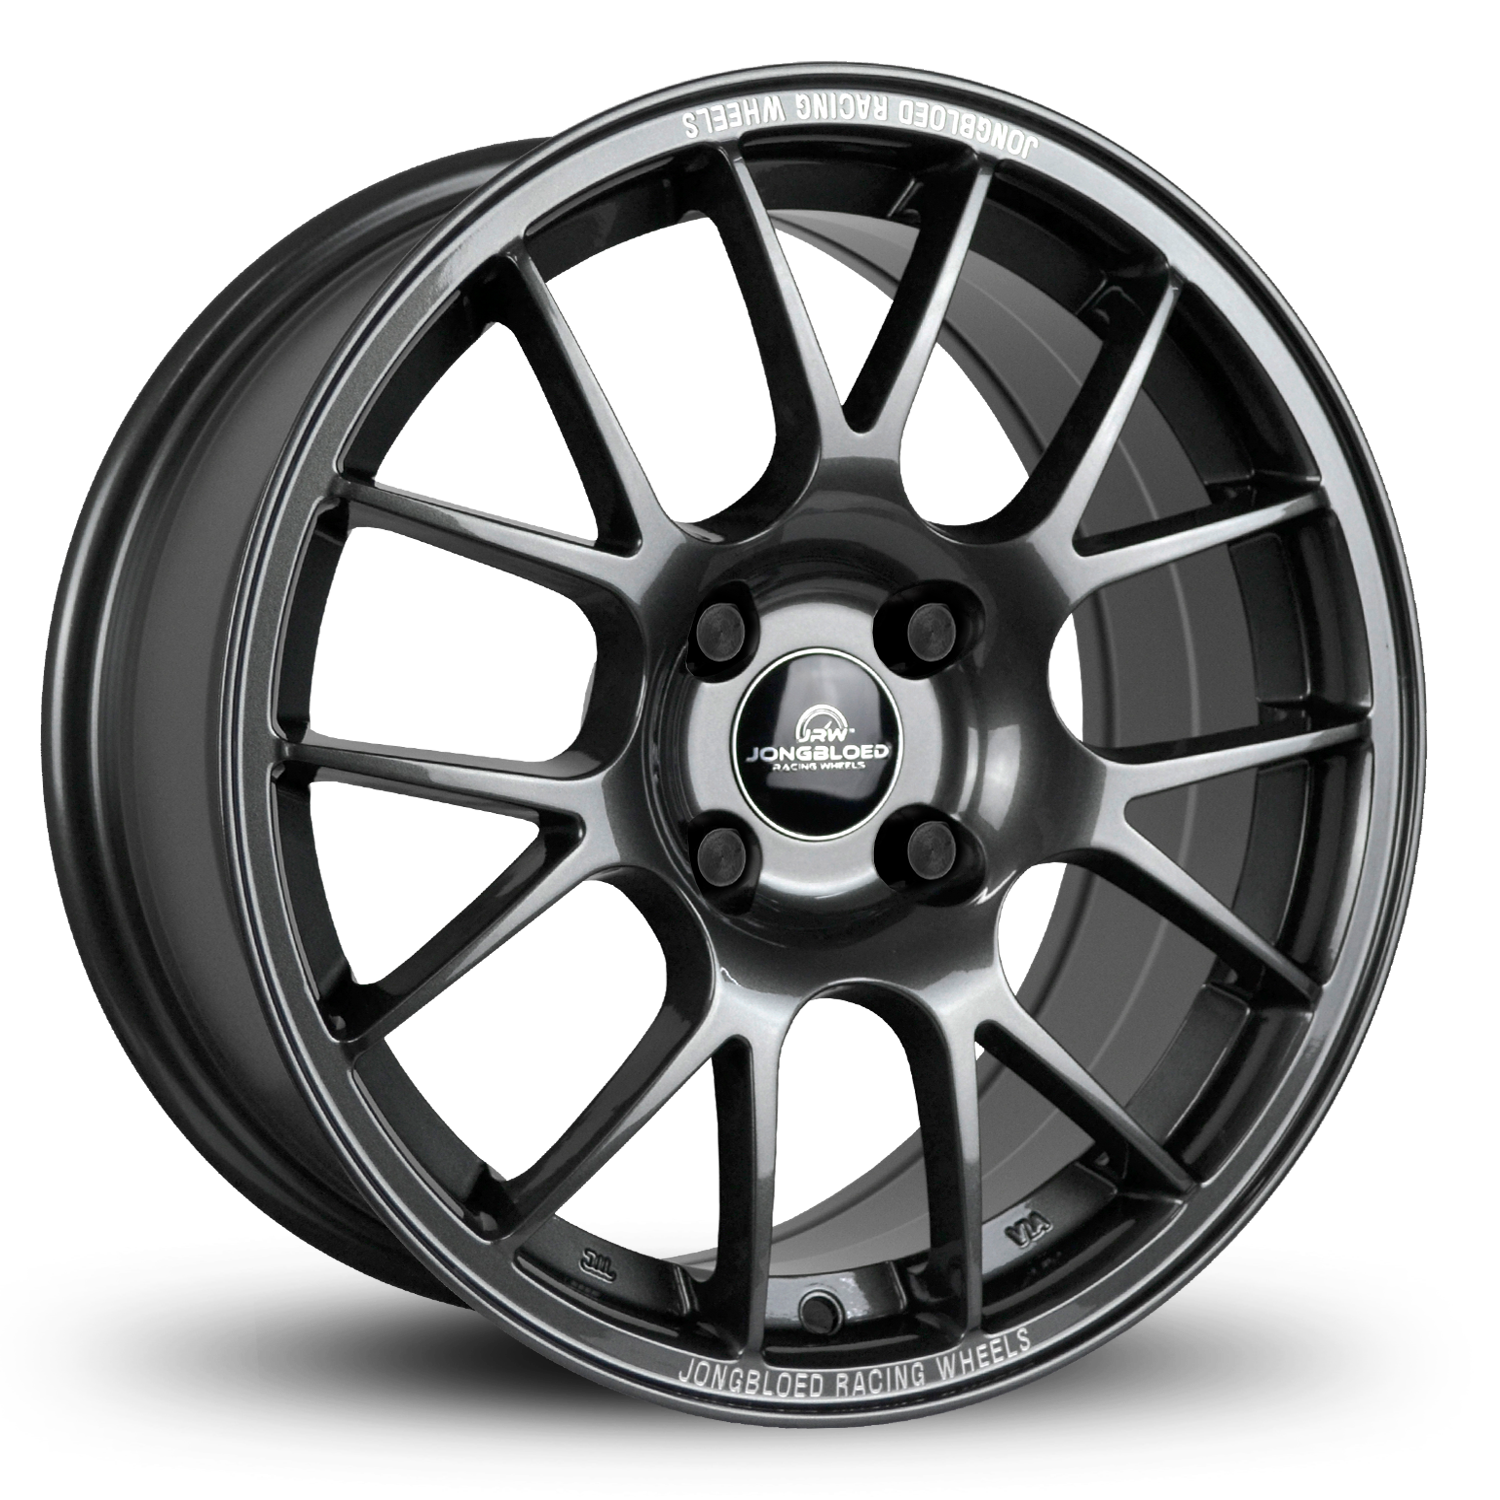 Jongbloed Racing Wheels SPEC MIATA PTS Series 400 Racing Wheel Rims in All Satin Dark Gunmetal